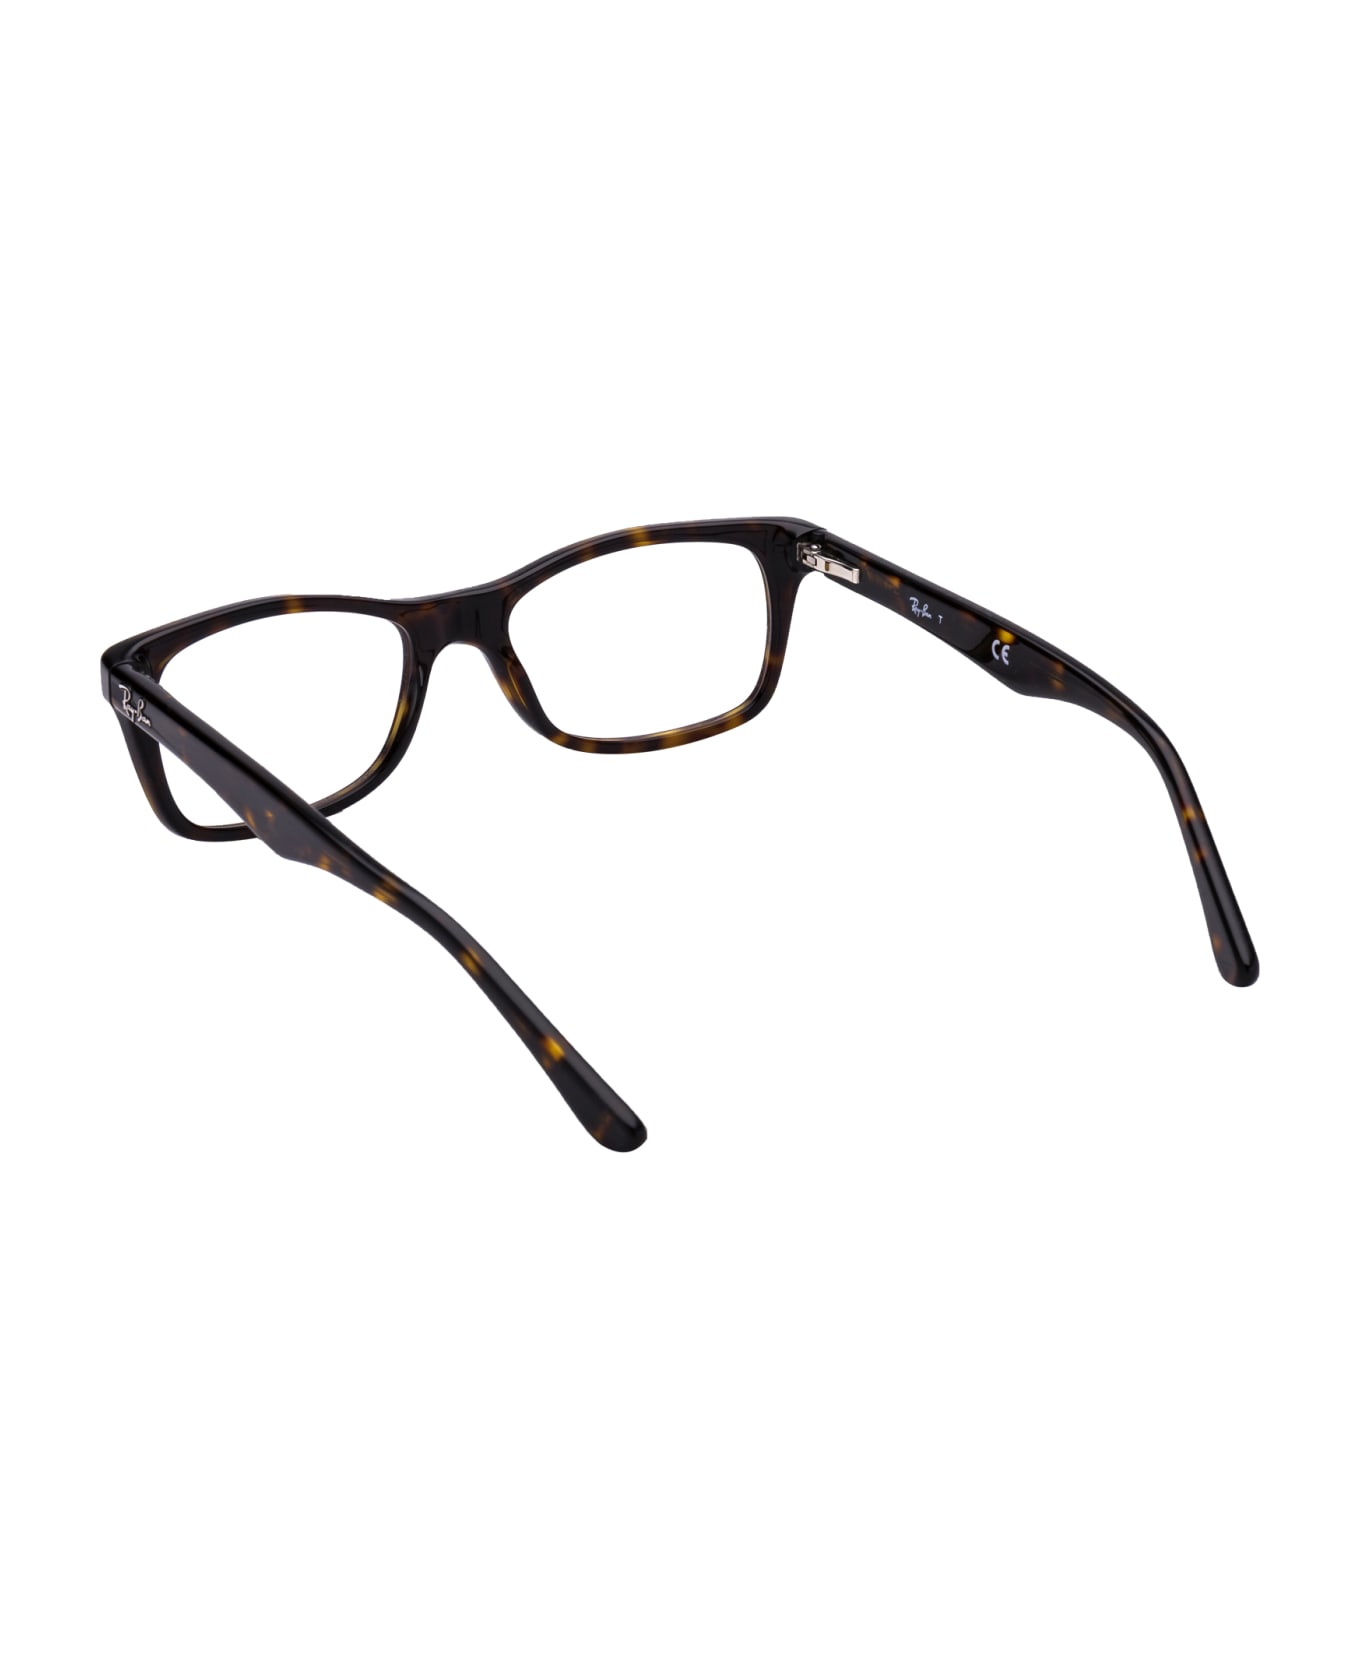 Ray-Ban 0rx5228 Glasses - 2012 DARK HAVANA アイウェア